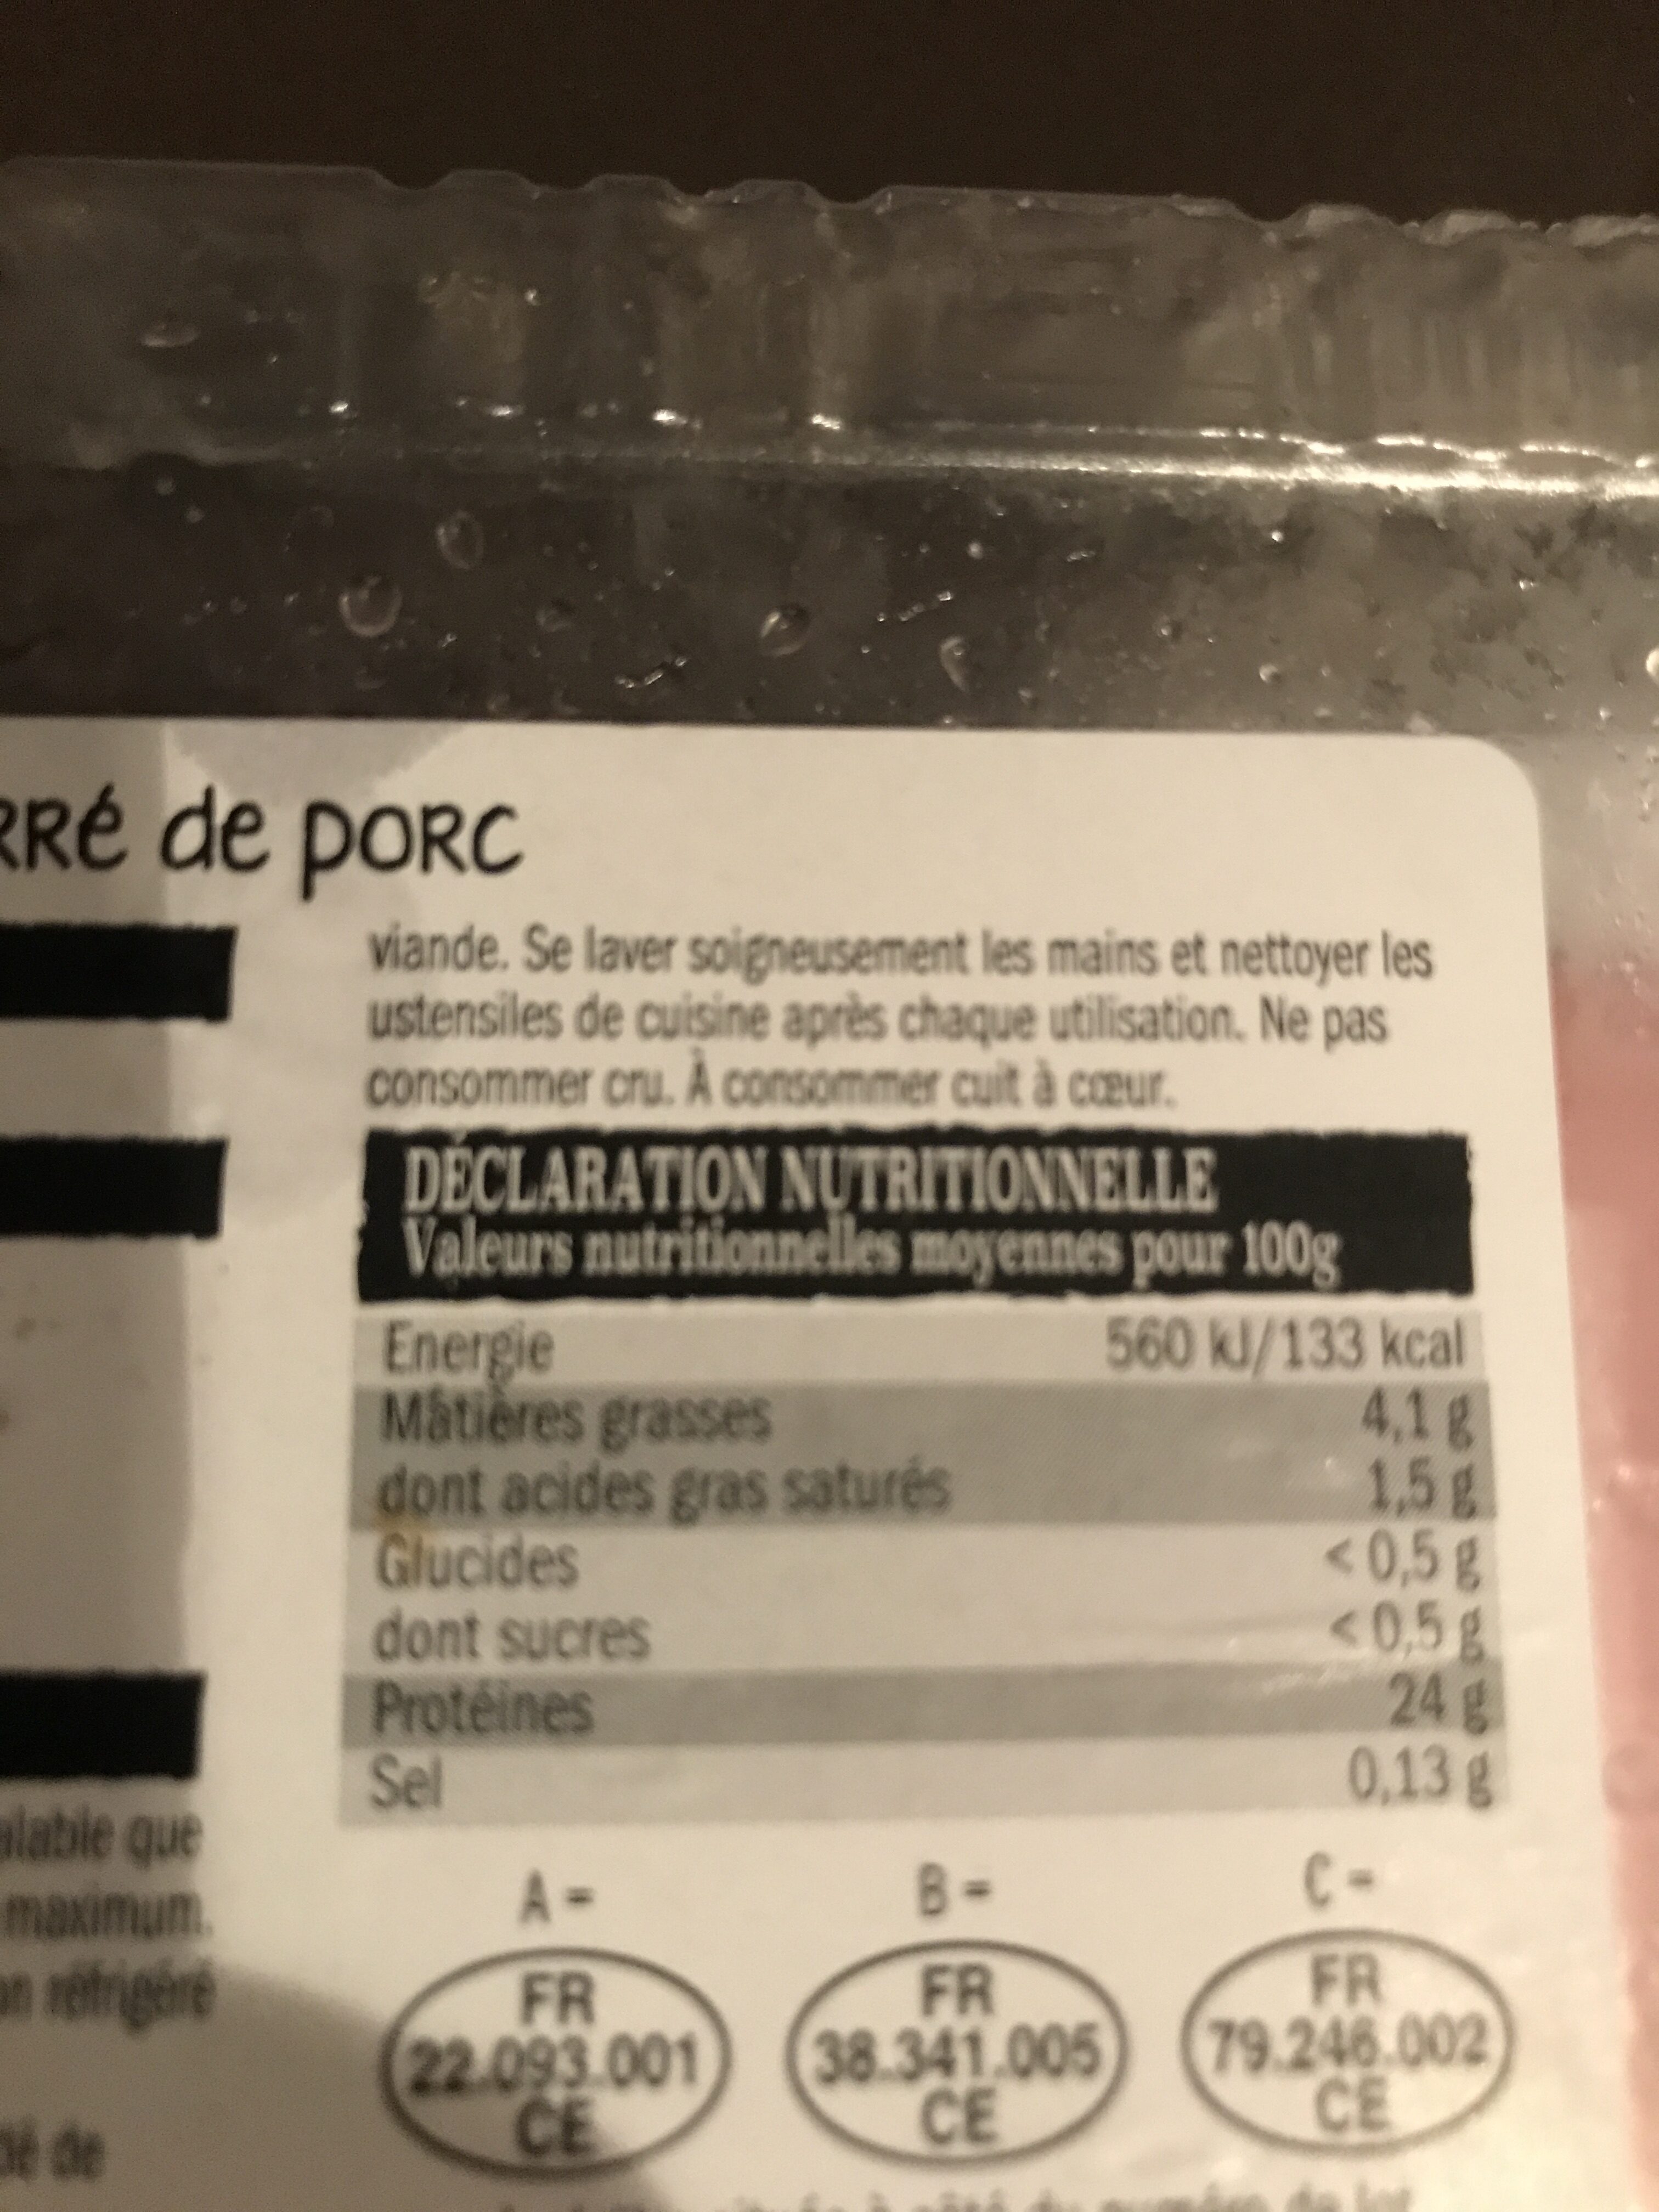 6 mincerettes de porc - Voedingswaarden - fr